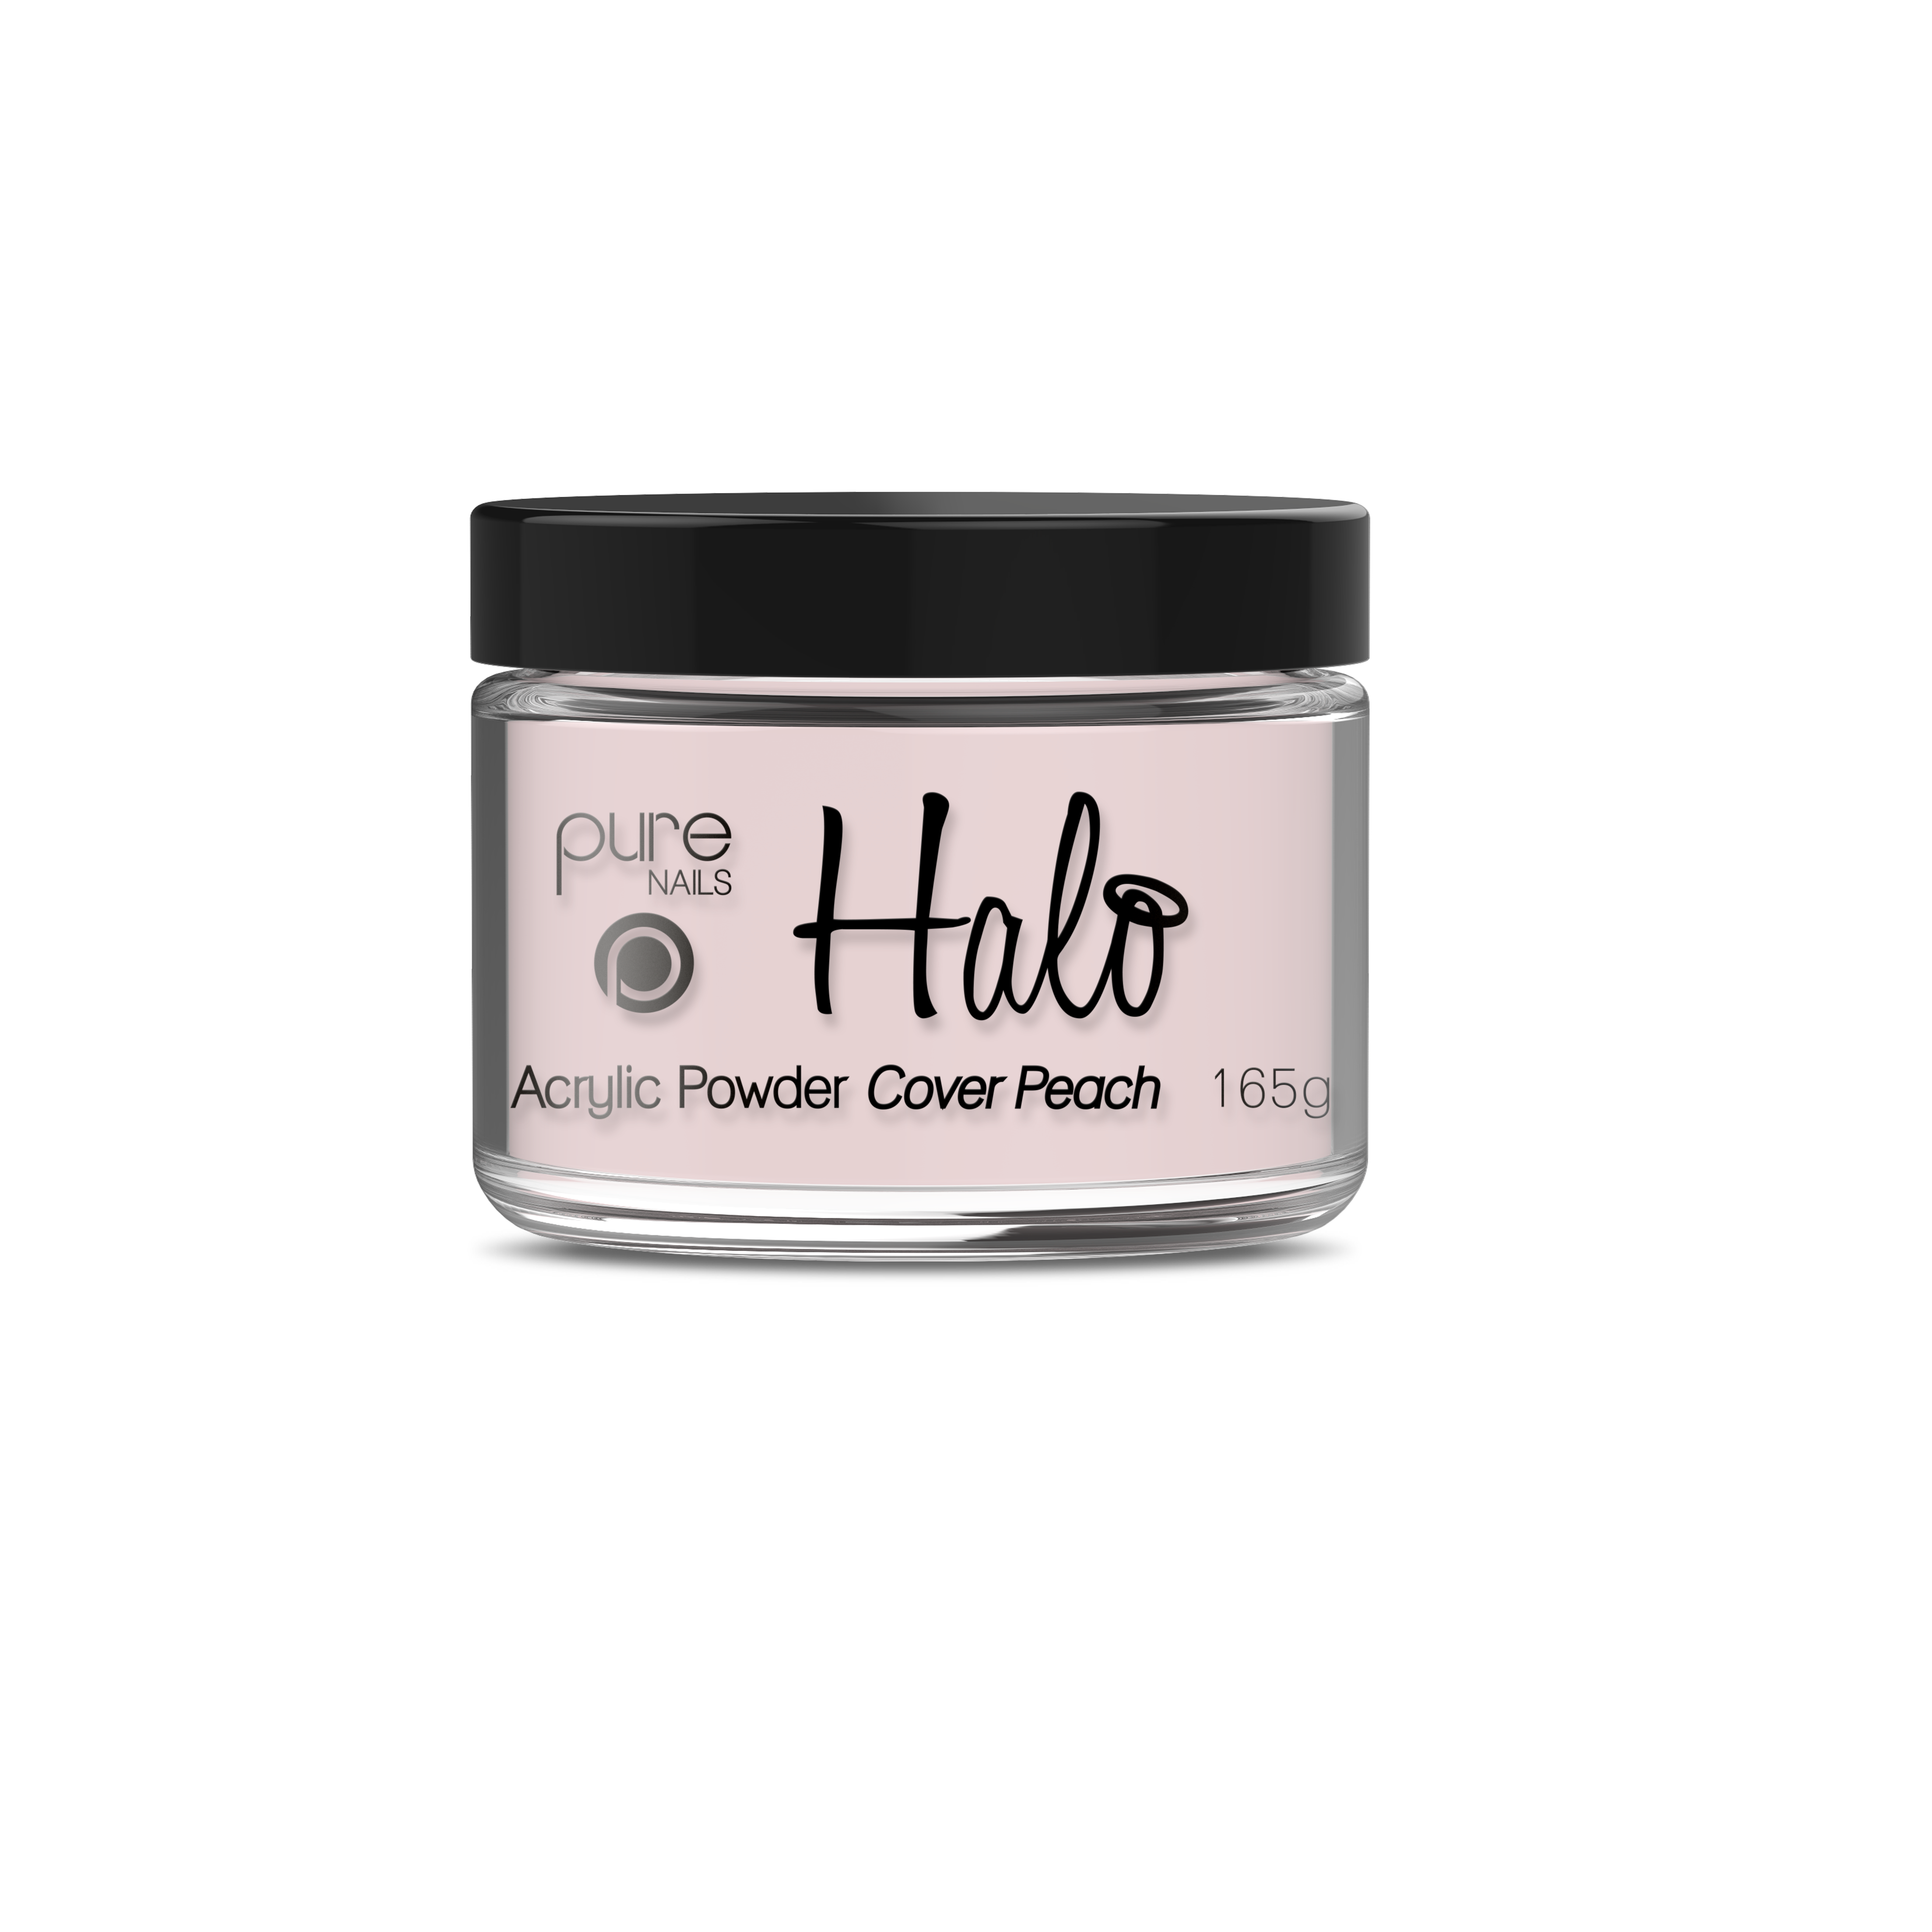 Halo Acrylic Powder Cover Peach 165g